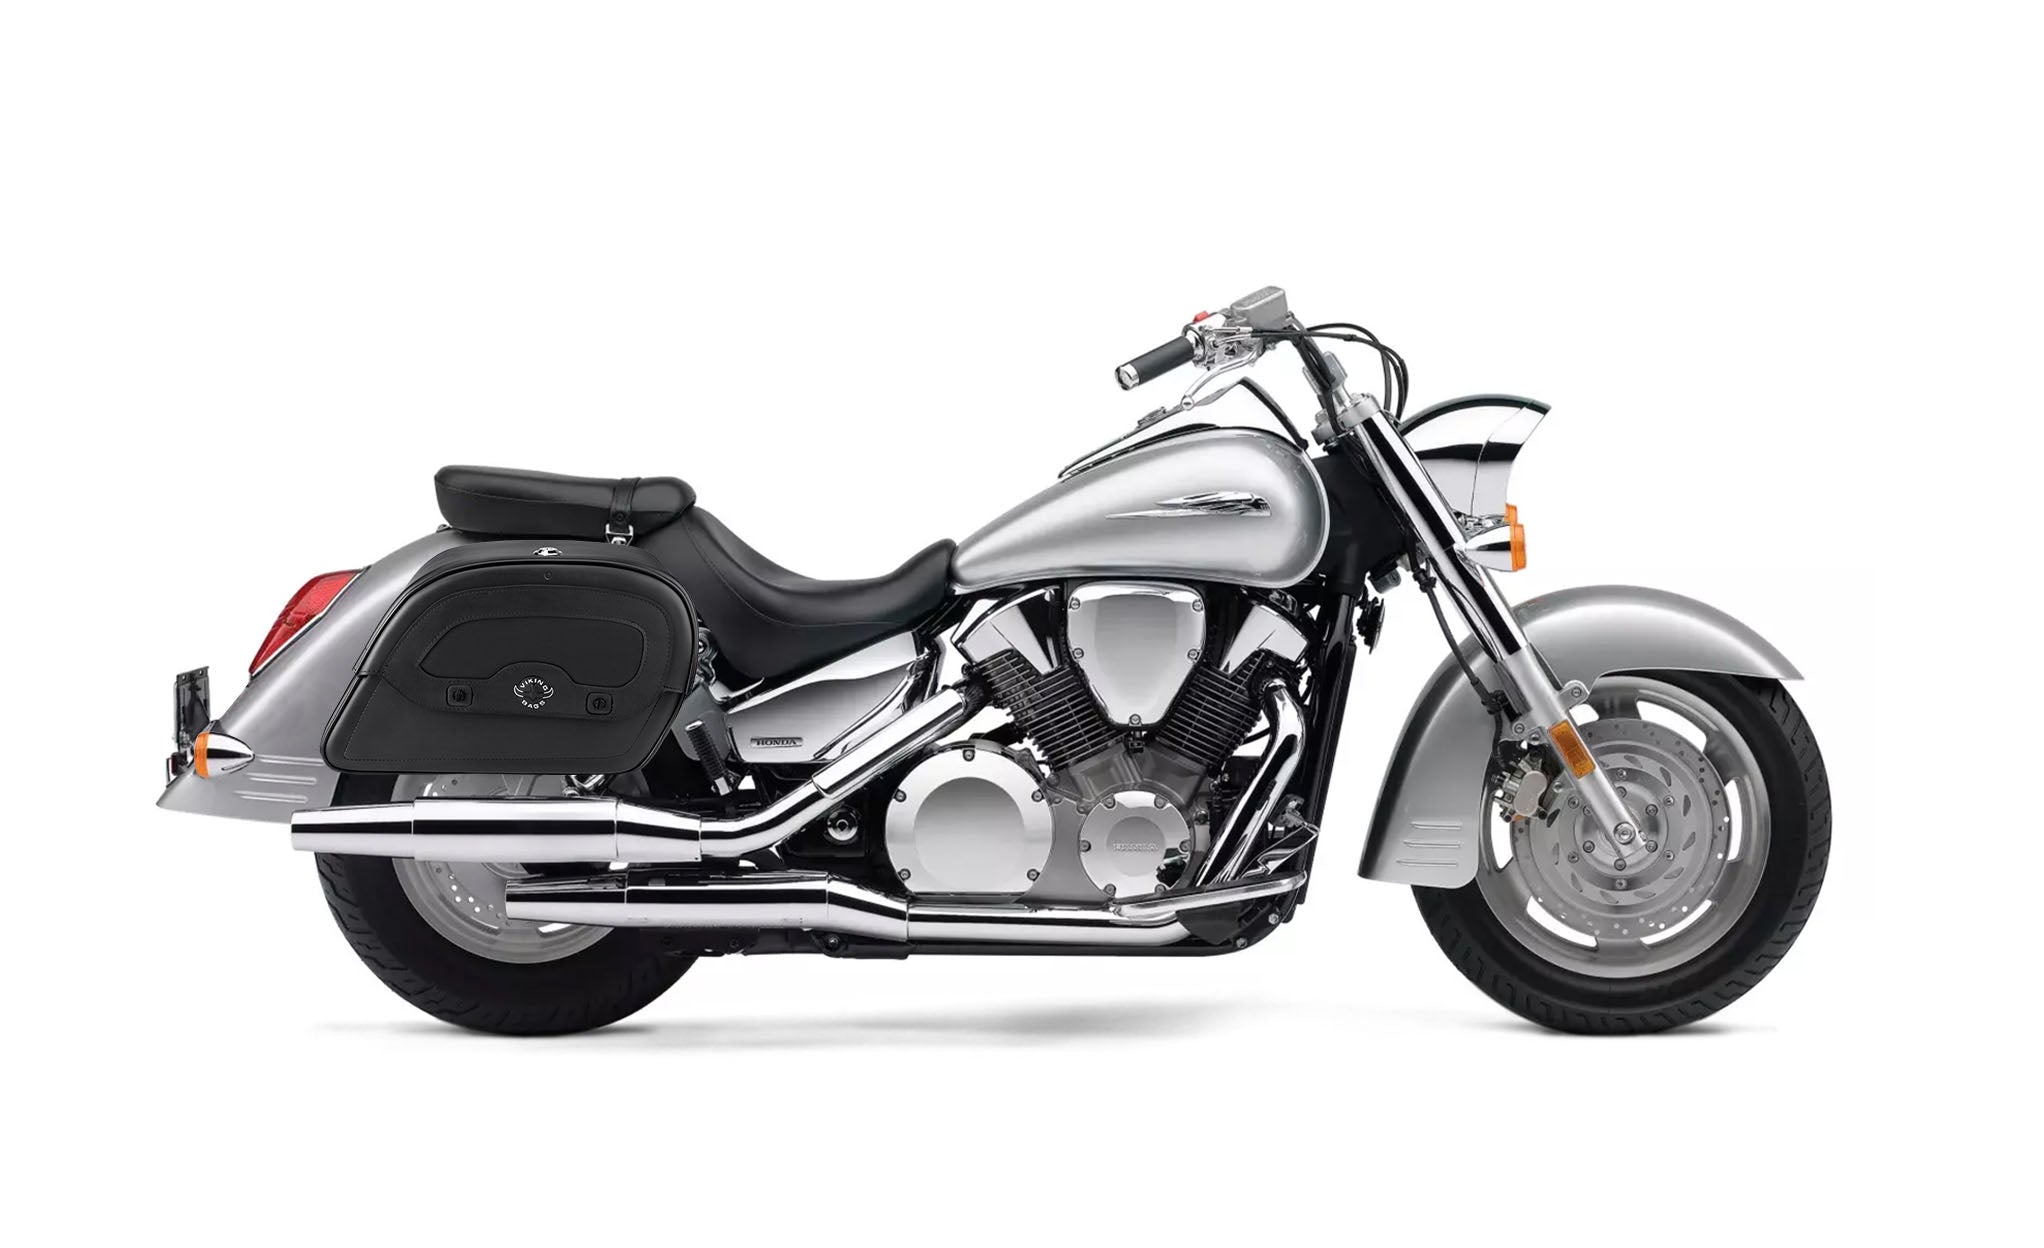 Viking Warrior Large Honda Vtx 1300 S Shock Cut Out Leather Motorcycle Saddlebags on Bike Photo @expand